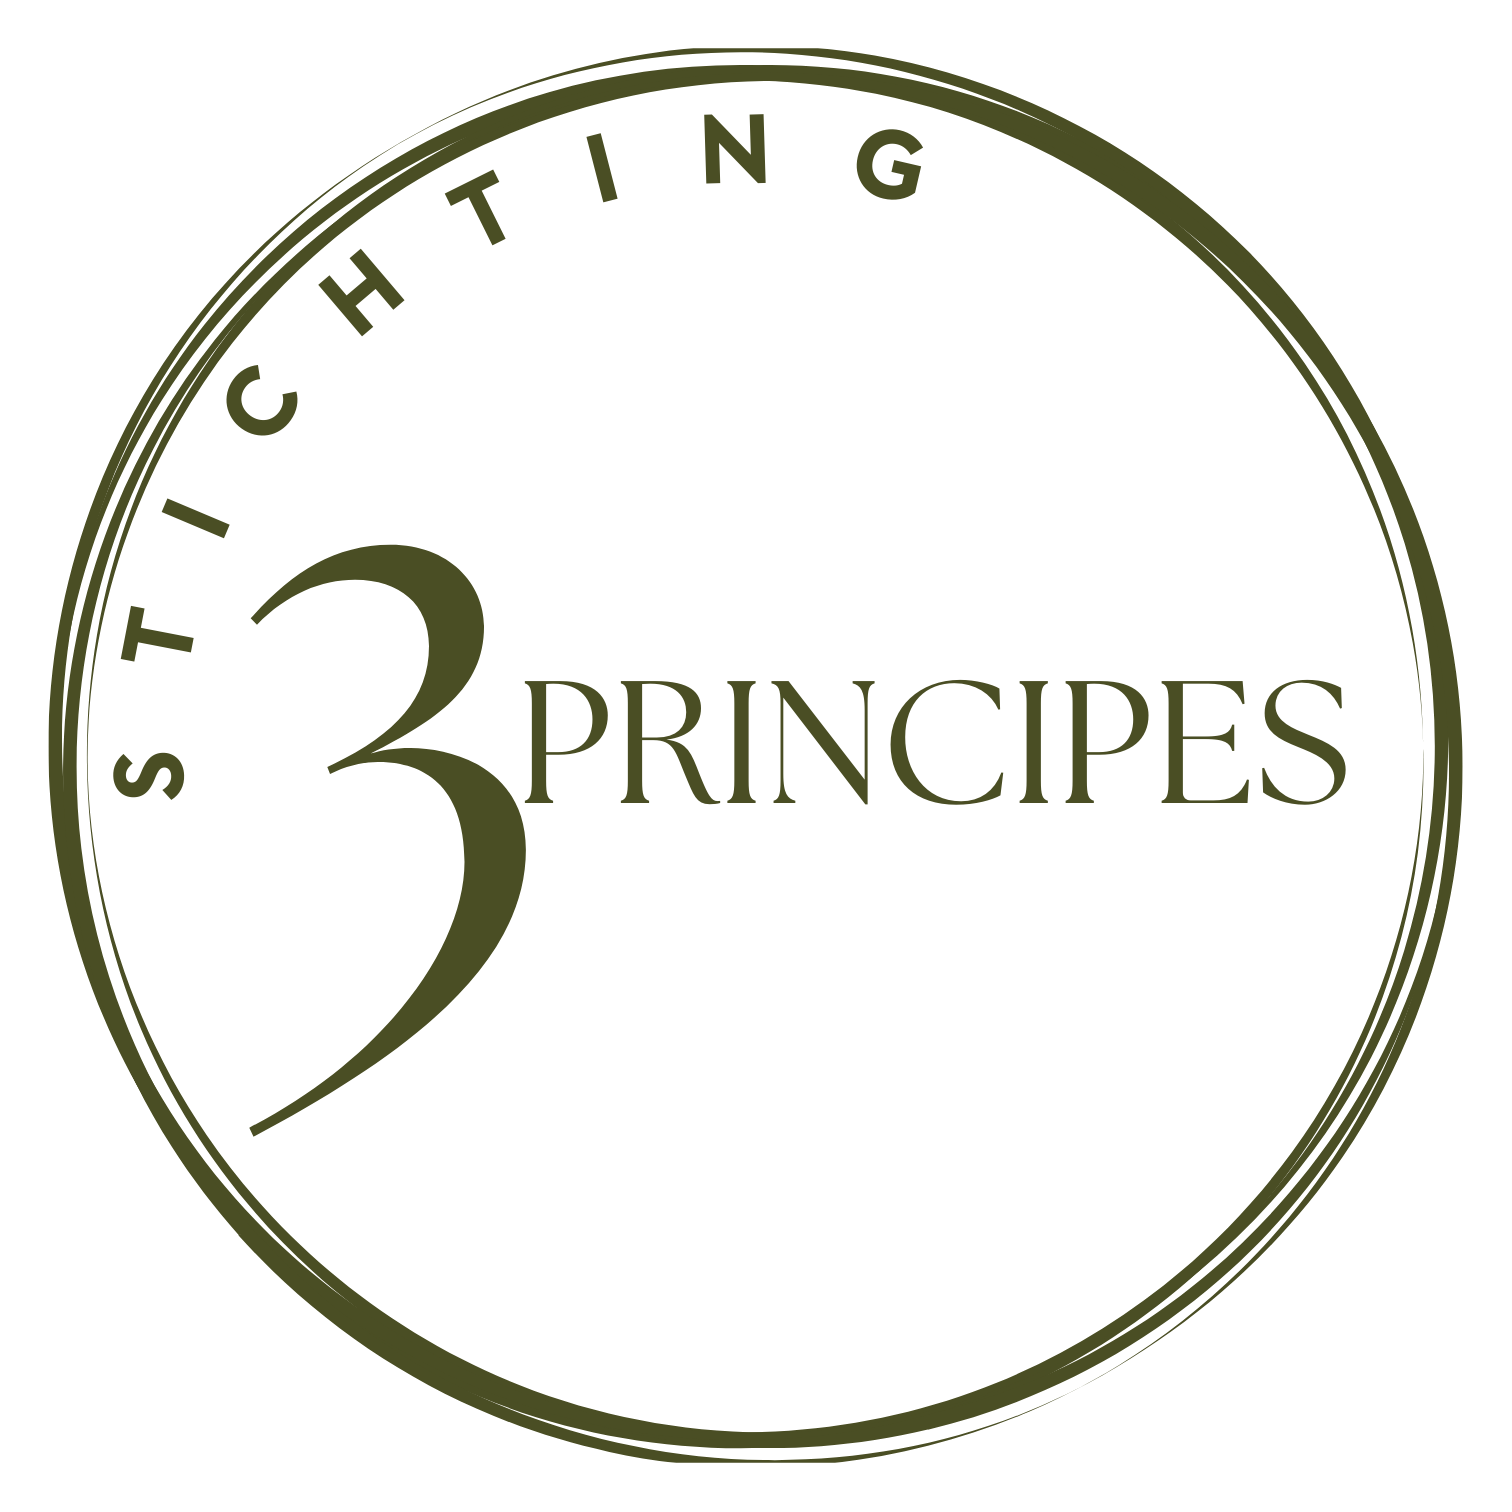 Stichting De 3 Principes